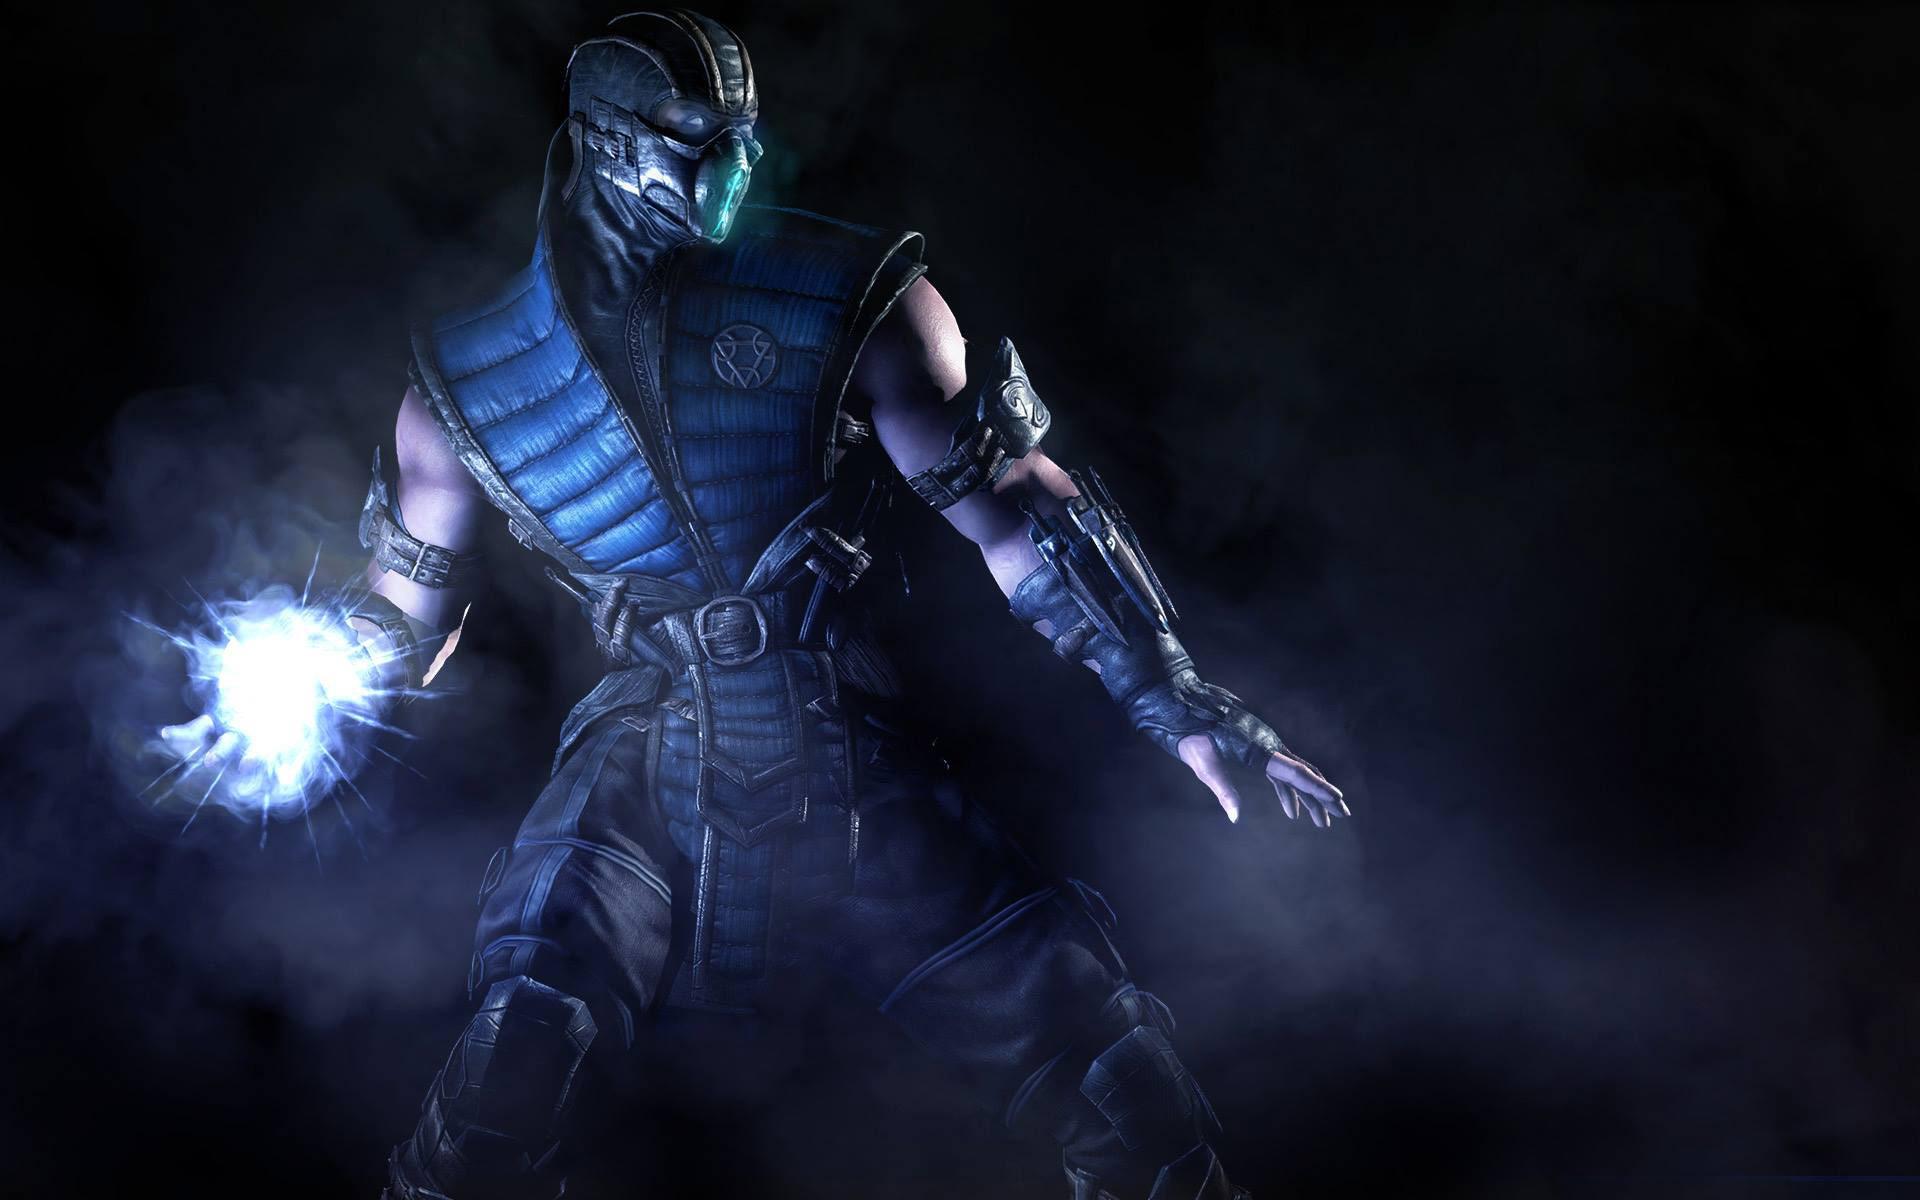 Trucos Mortal Kombat - Xbox 360 - Claves, Guías